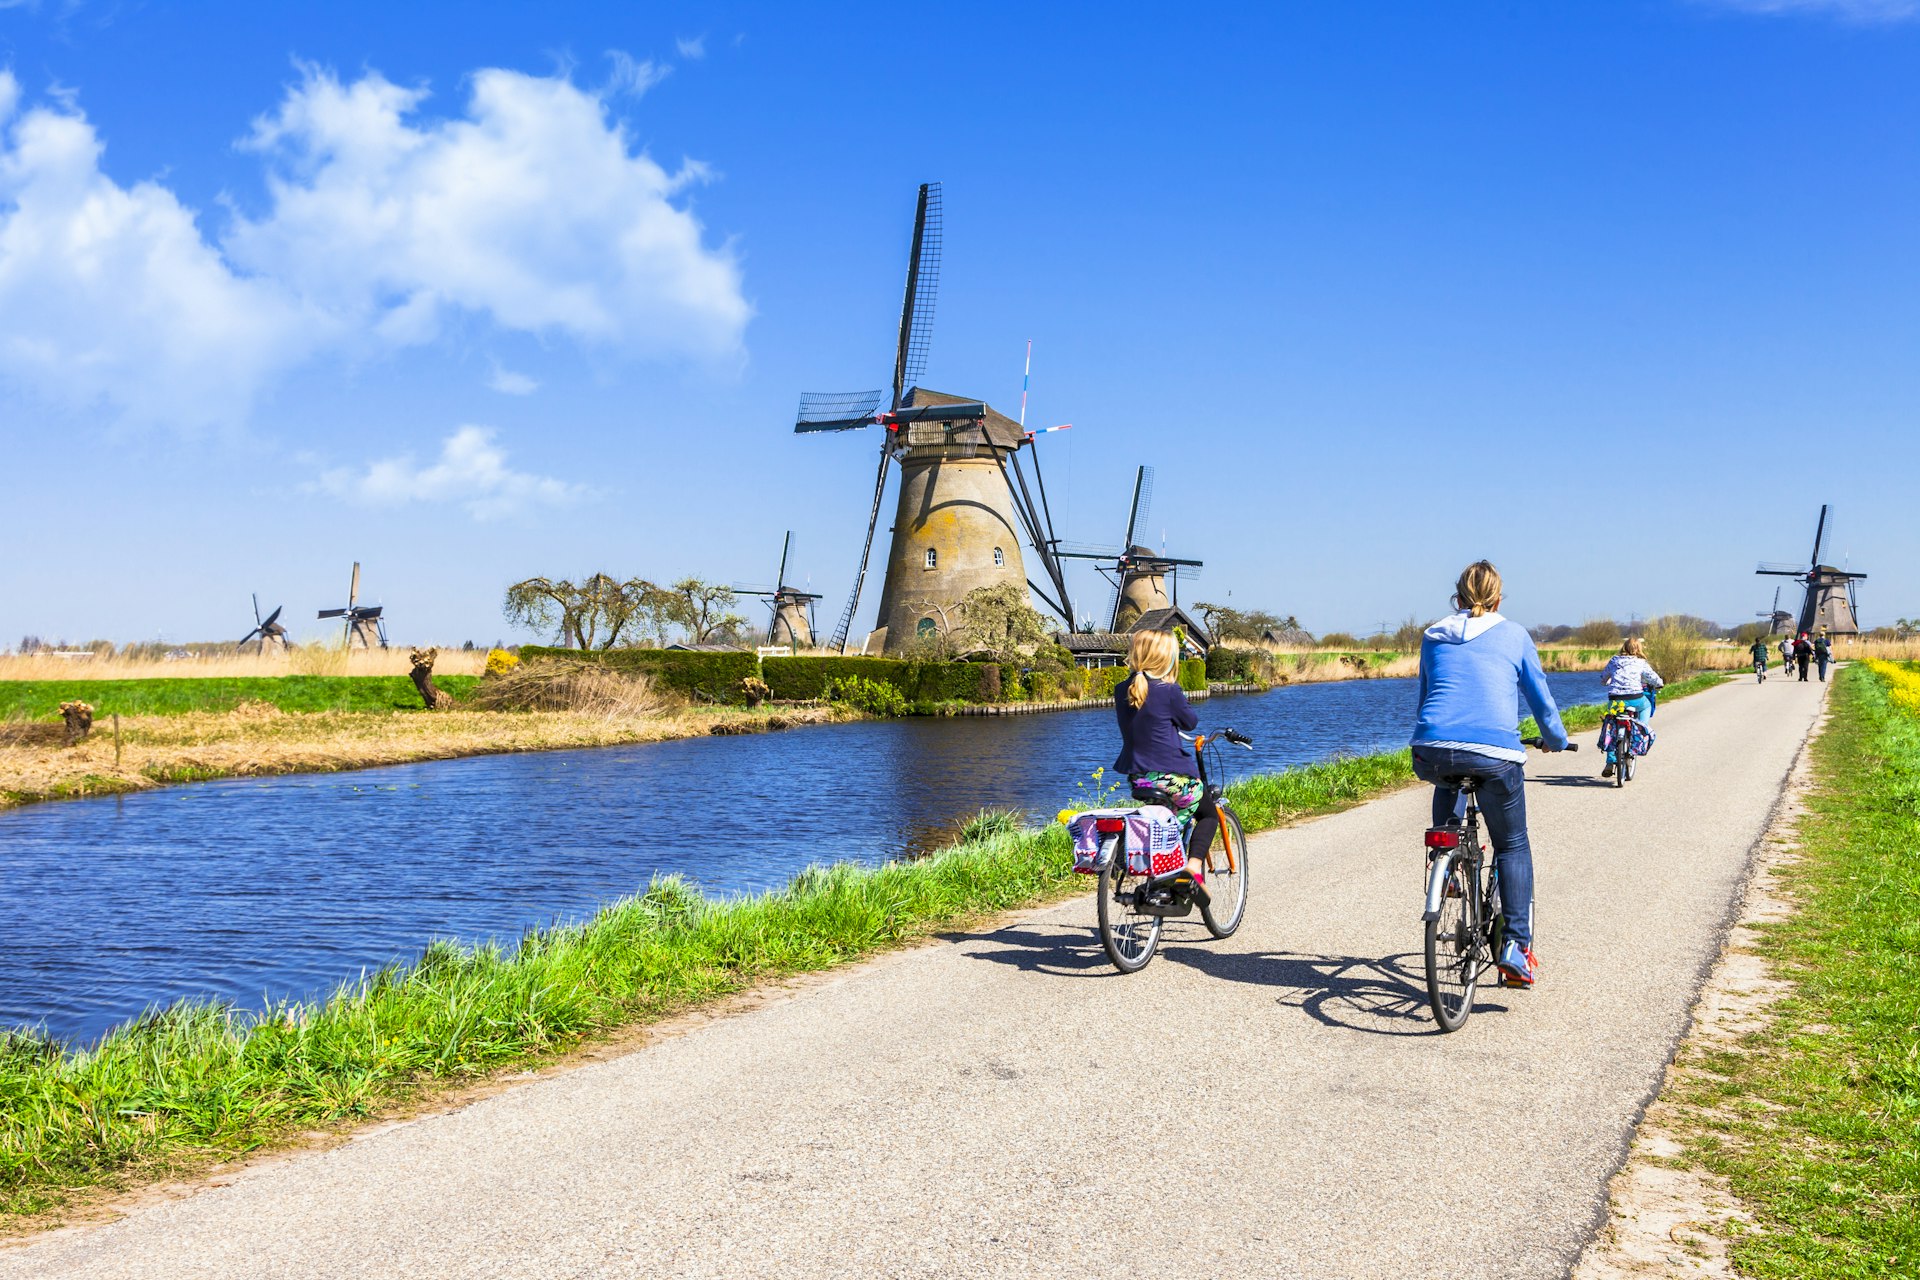 Mother and children ride bicyles past windmills at Kinderdijk.